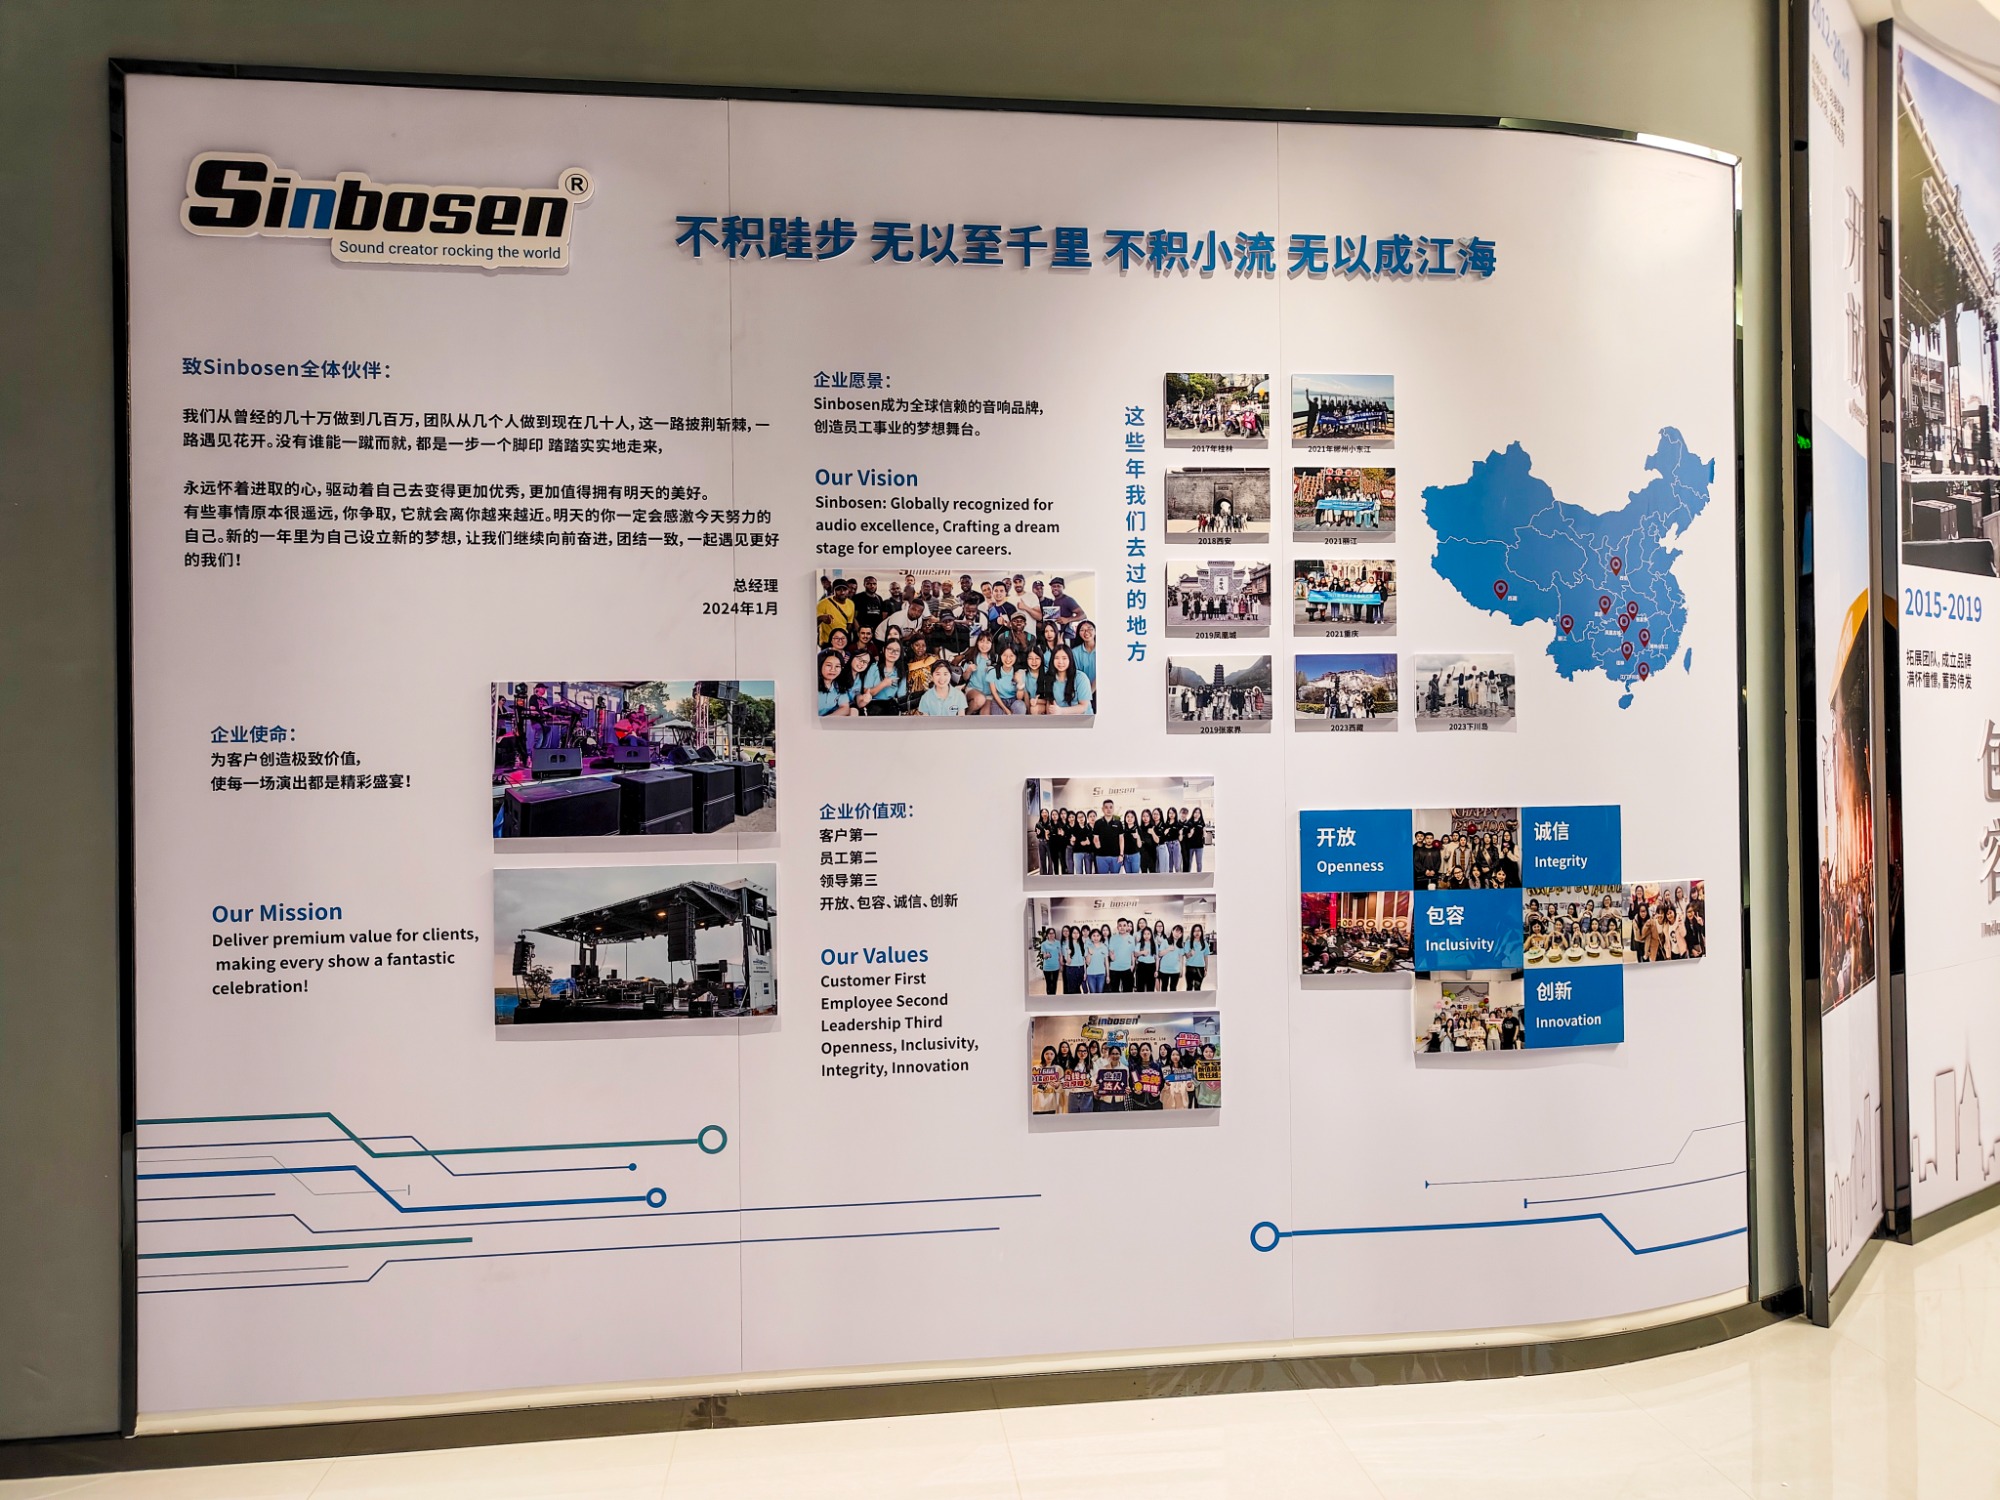 Notice: Sinbosen has relocated to Huadu District, Guangzhou!